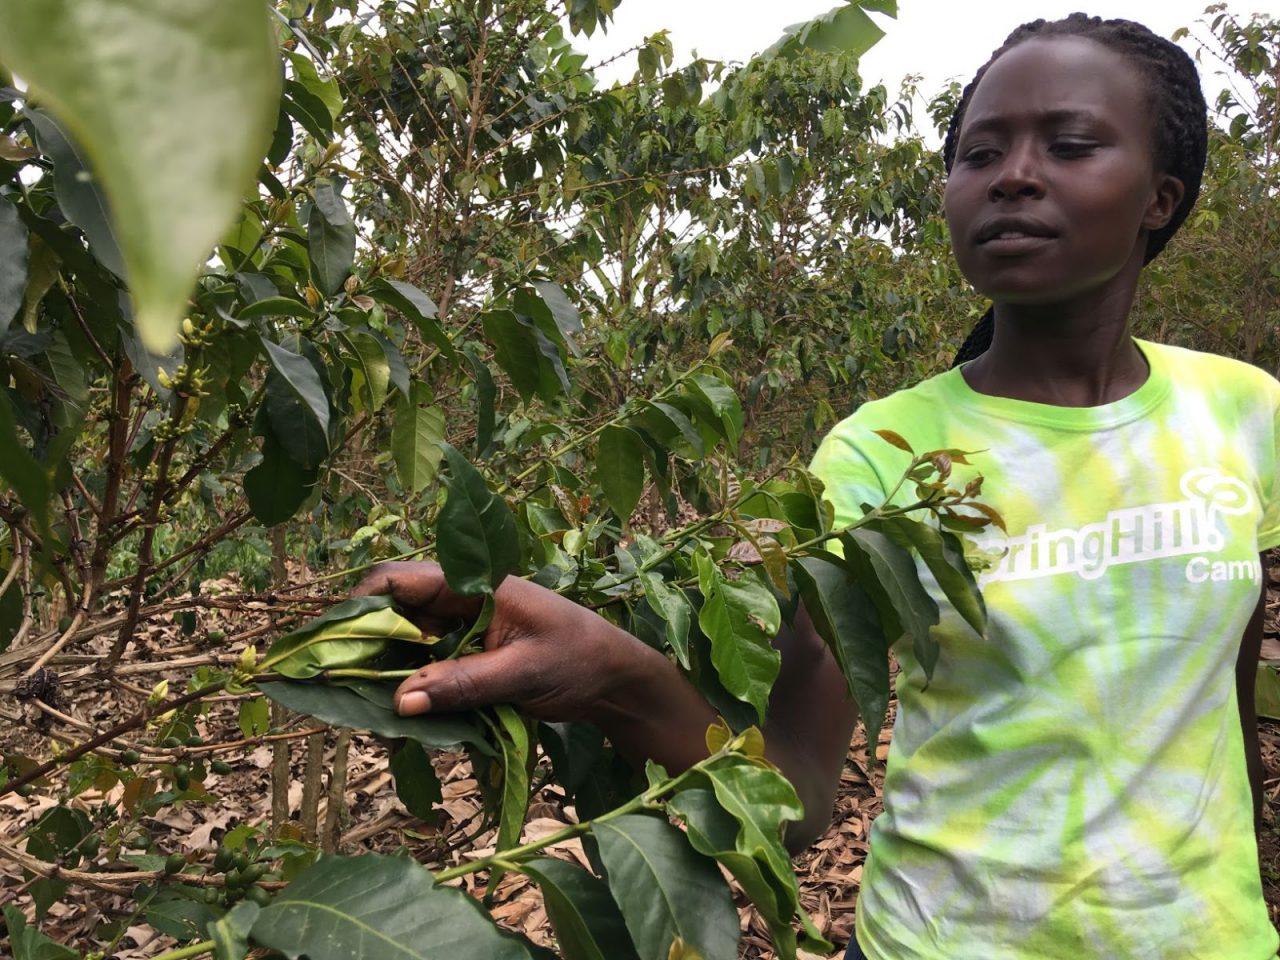 Ejo Heza farmer checks the quality of a coffee tree